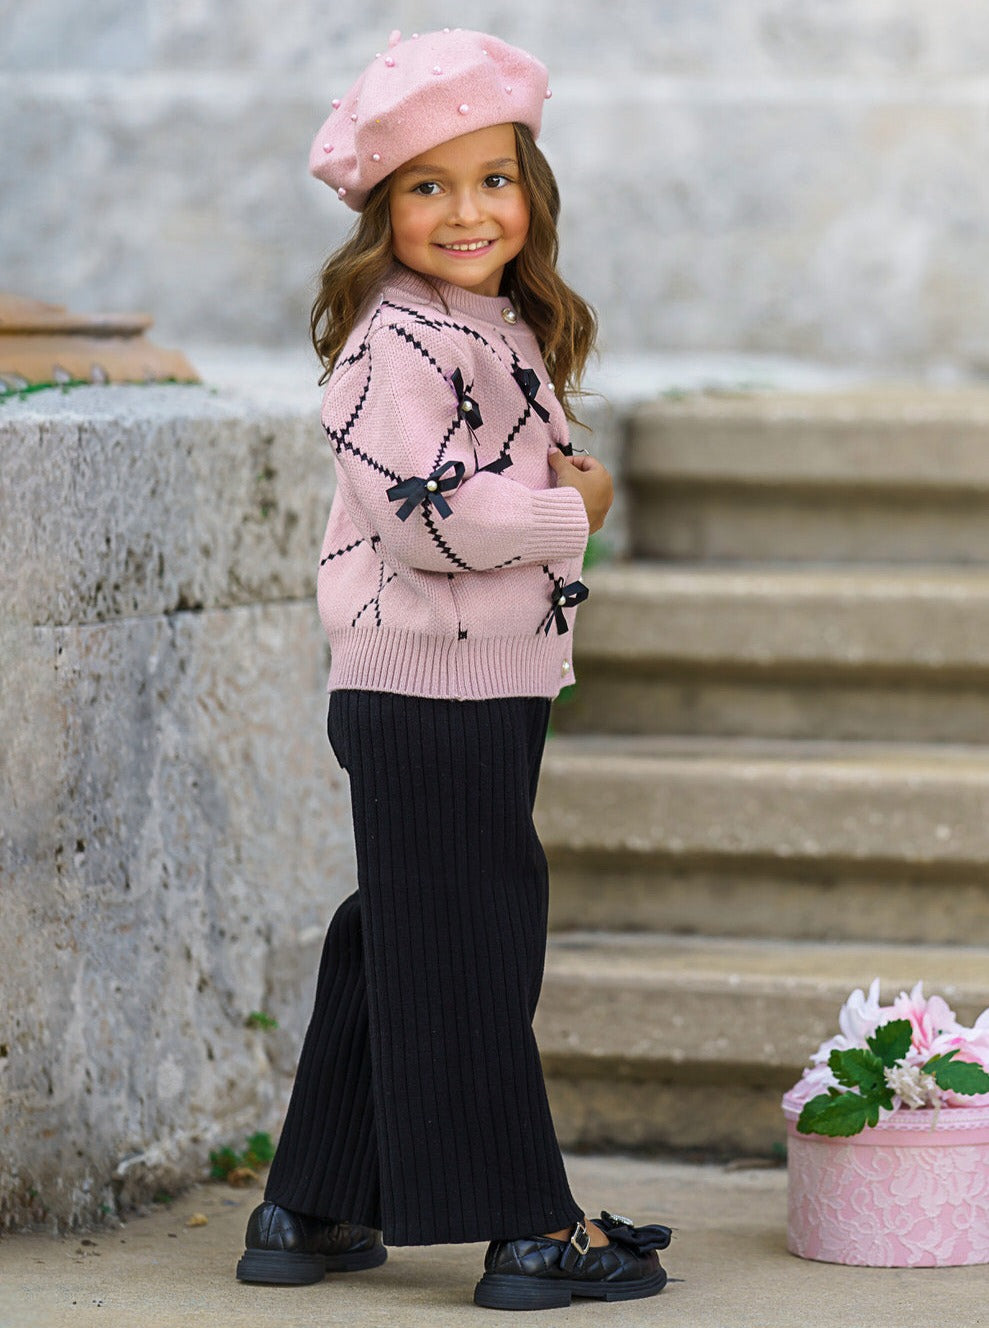 Darling Fashionista Bow-Embellished Pink Sweater & Pants Set